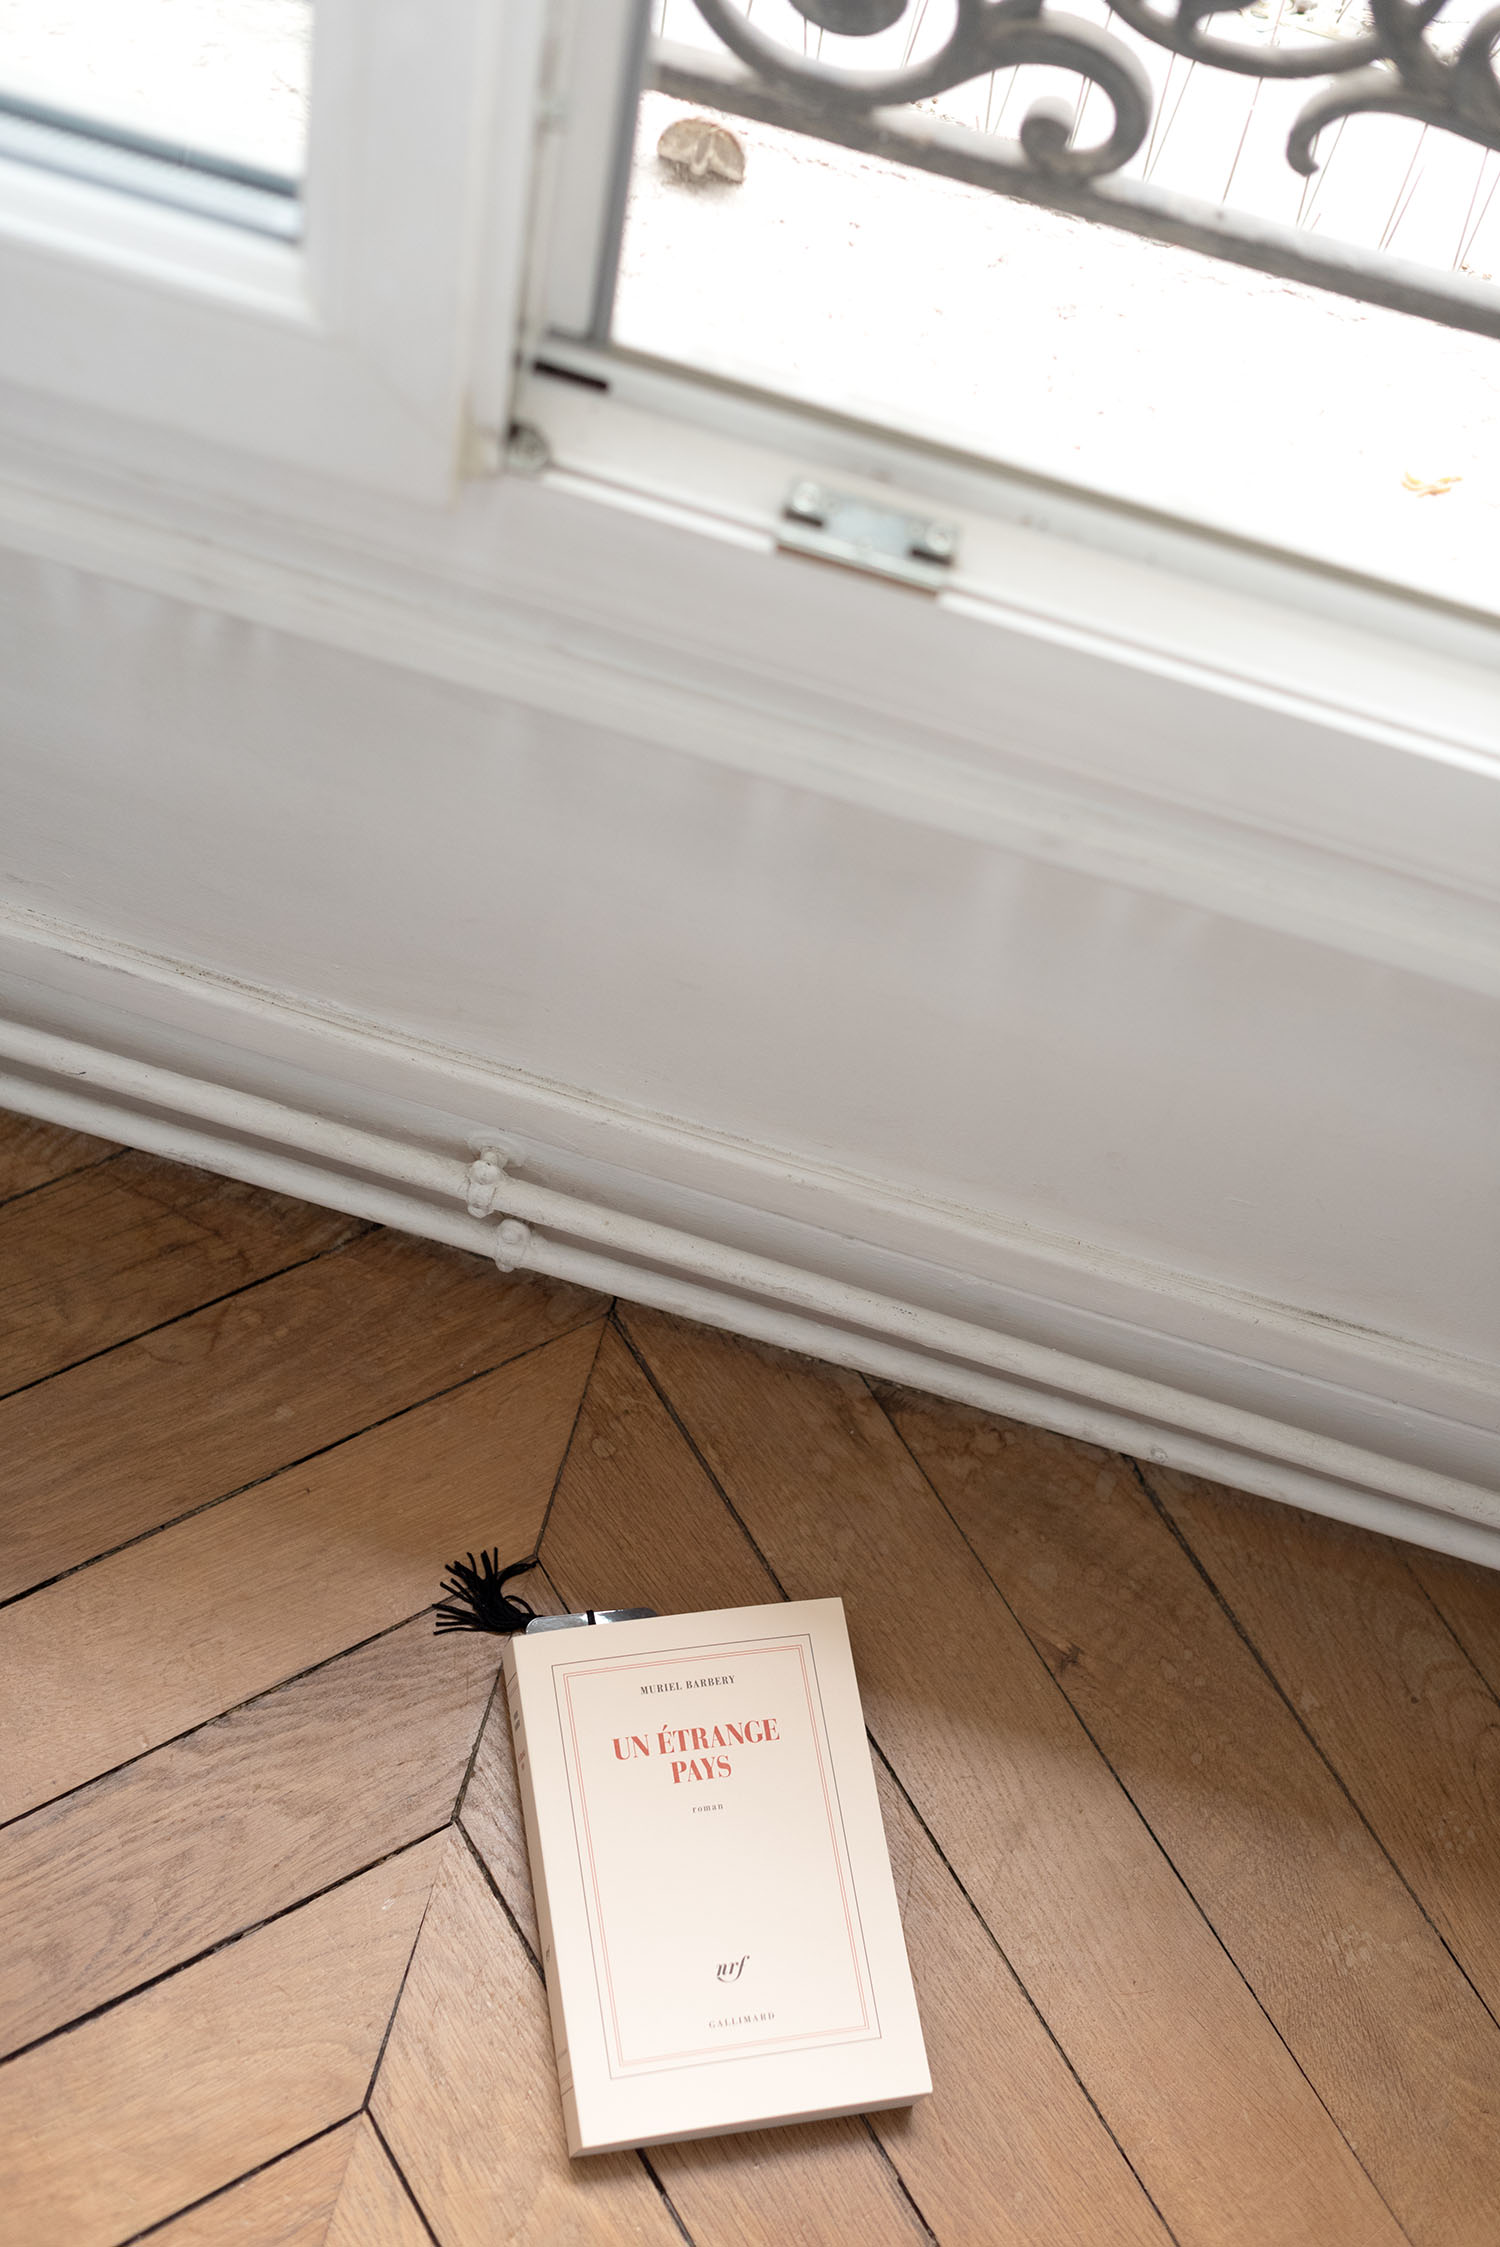 Coco & Vera - Un Etrange Pays, novel by Muriel Barbery, on a parquet floor in a Paris apartment